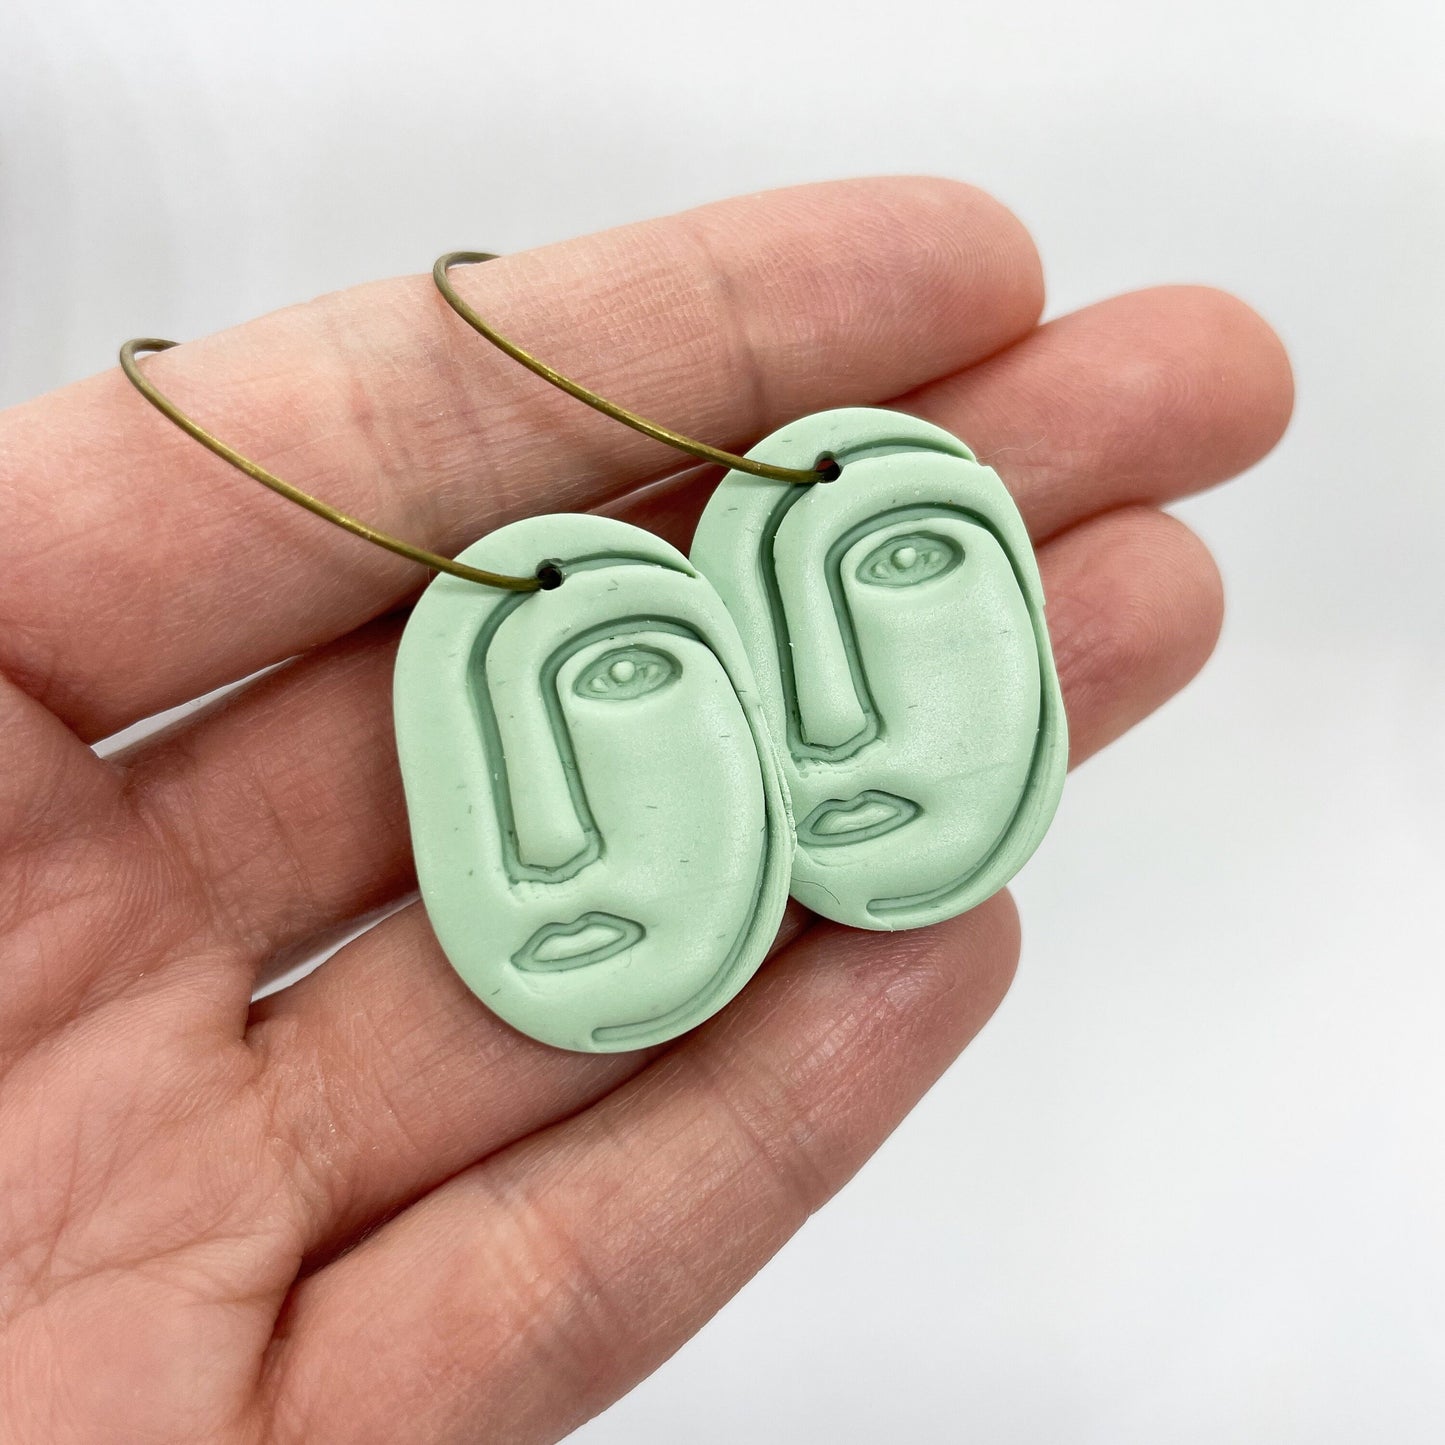 polymer clay face earrings, green embossed boho style hoop earrings, post box gift, best friend birthday gift, girlfriend gift,